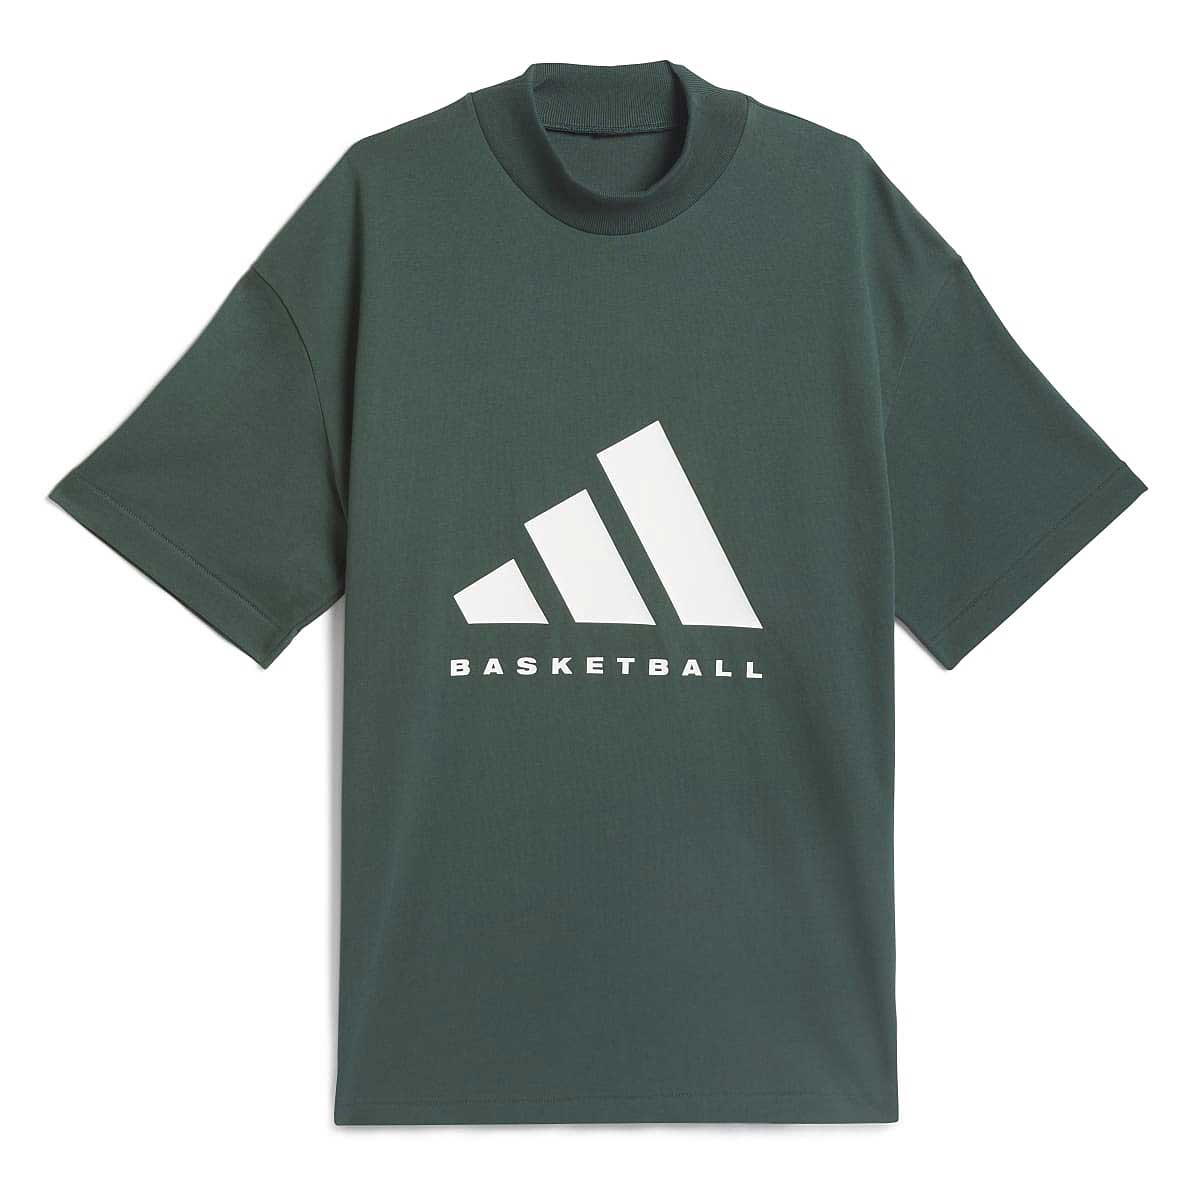 Image of Adidas Basketball T-shirt, Green